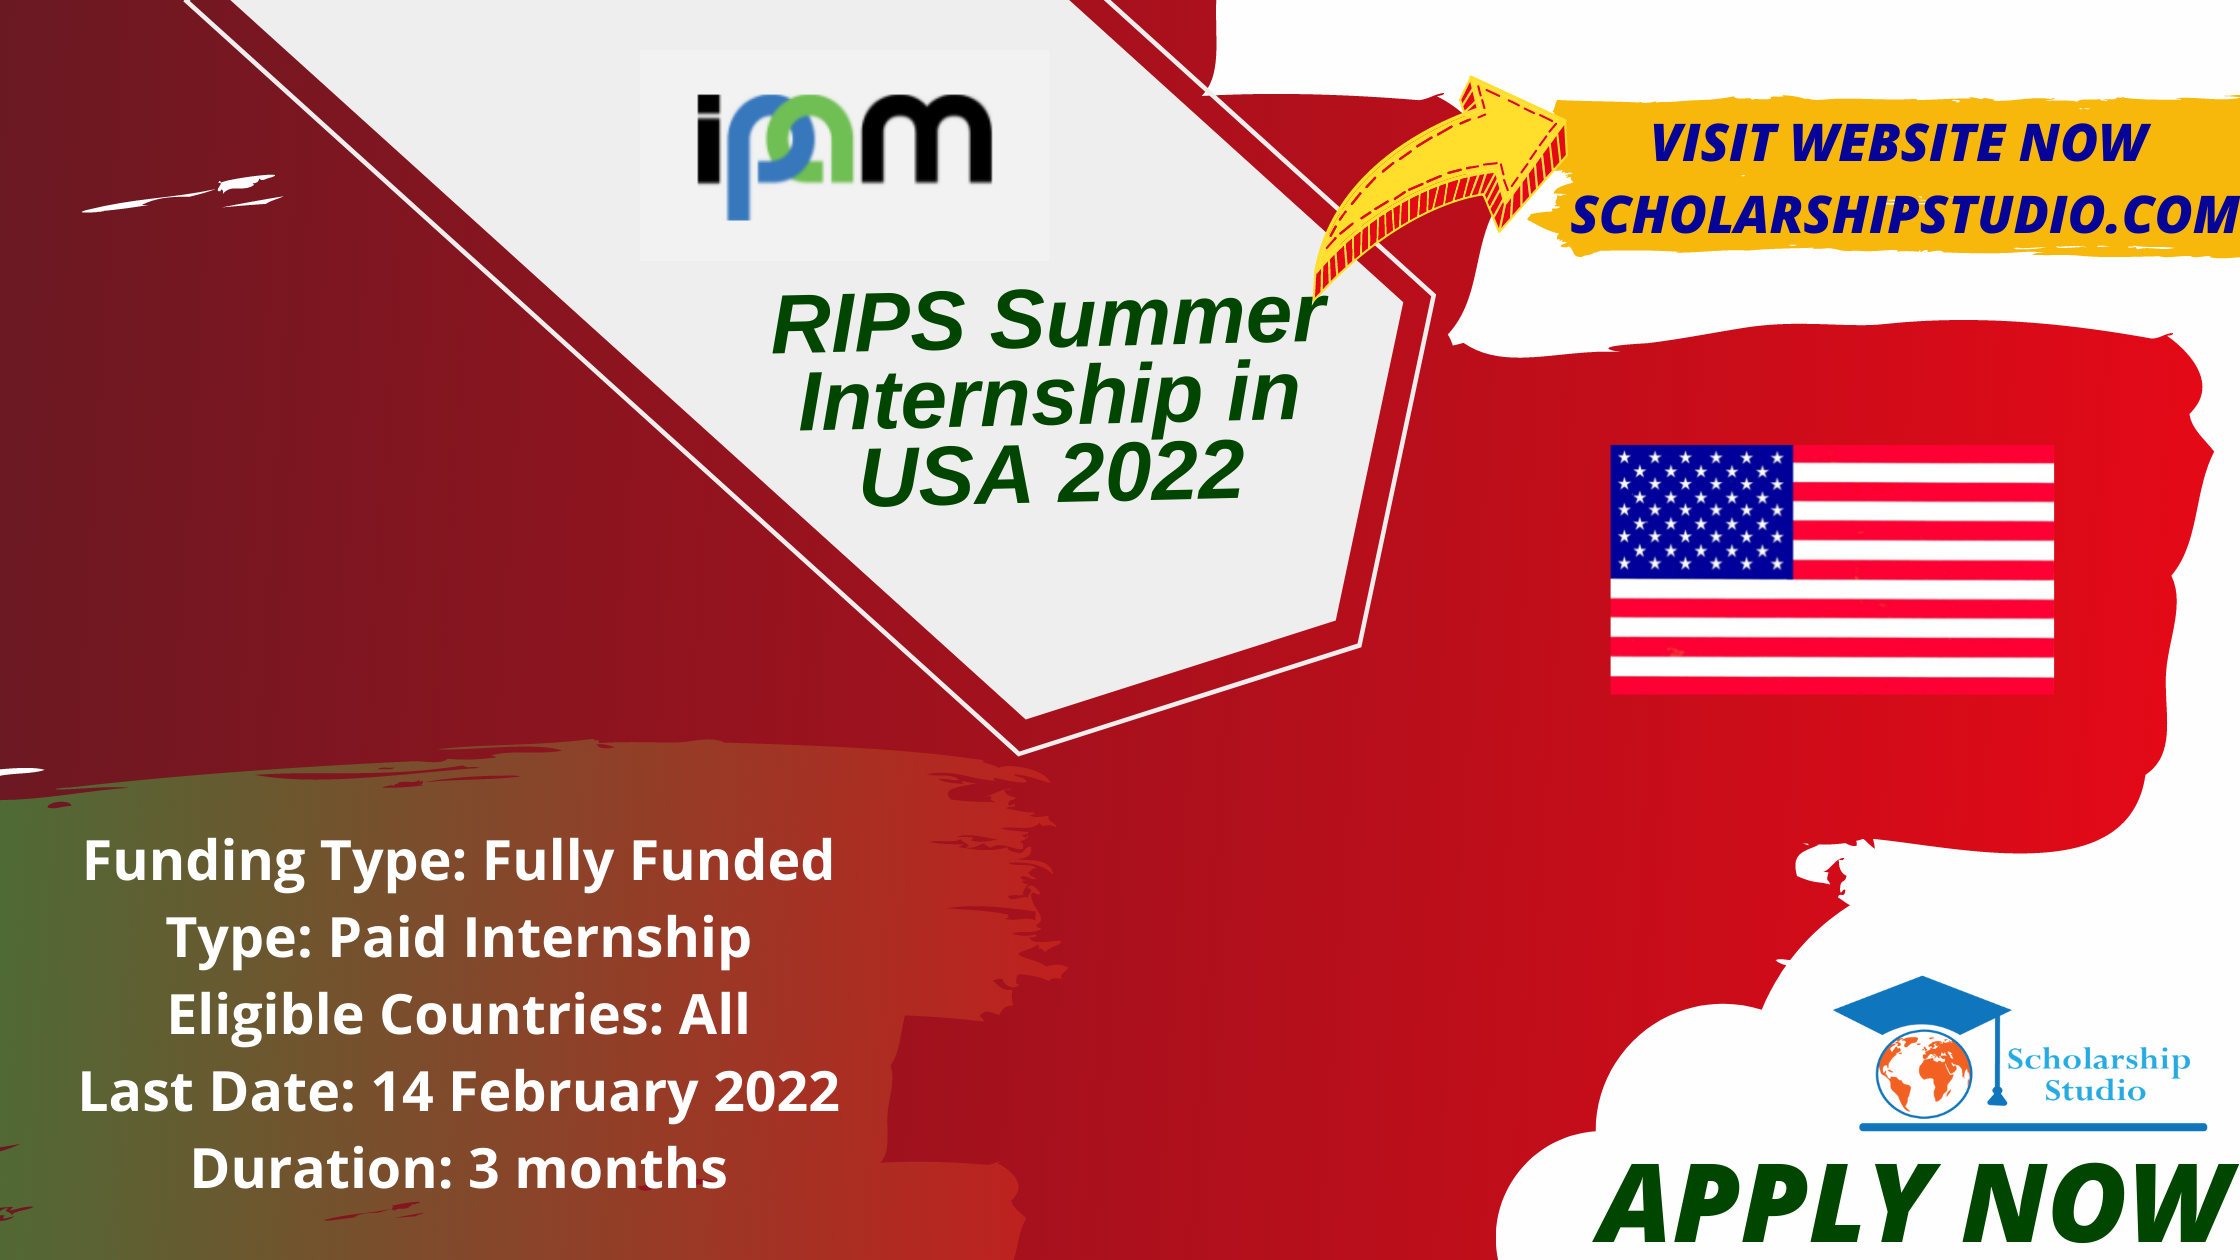 RIPS Summer Internship in USA 2022 Scholarship studio